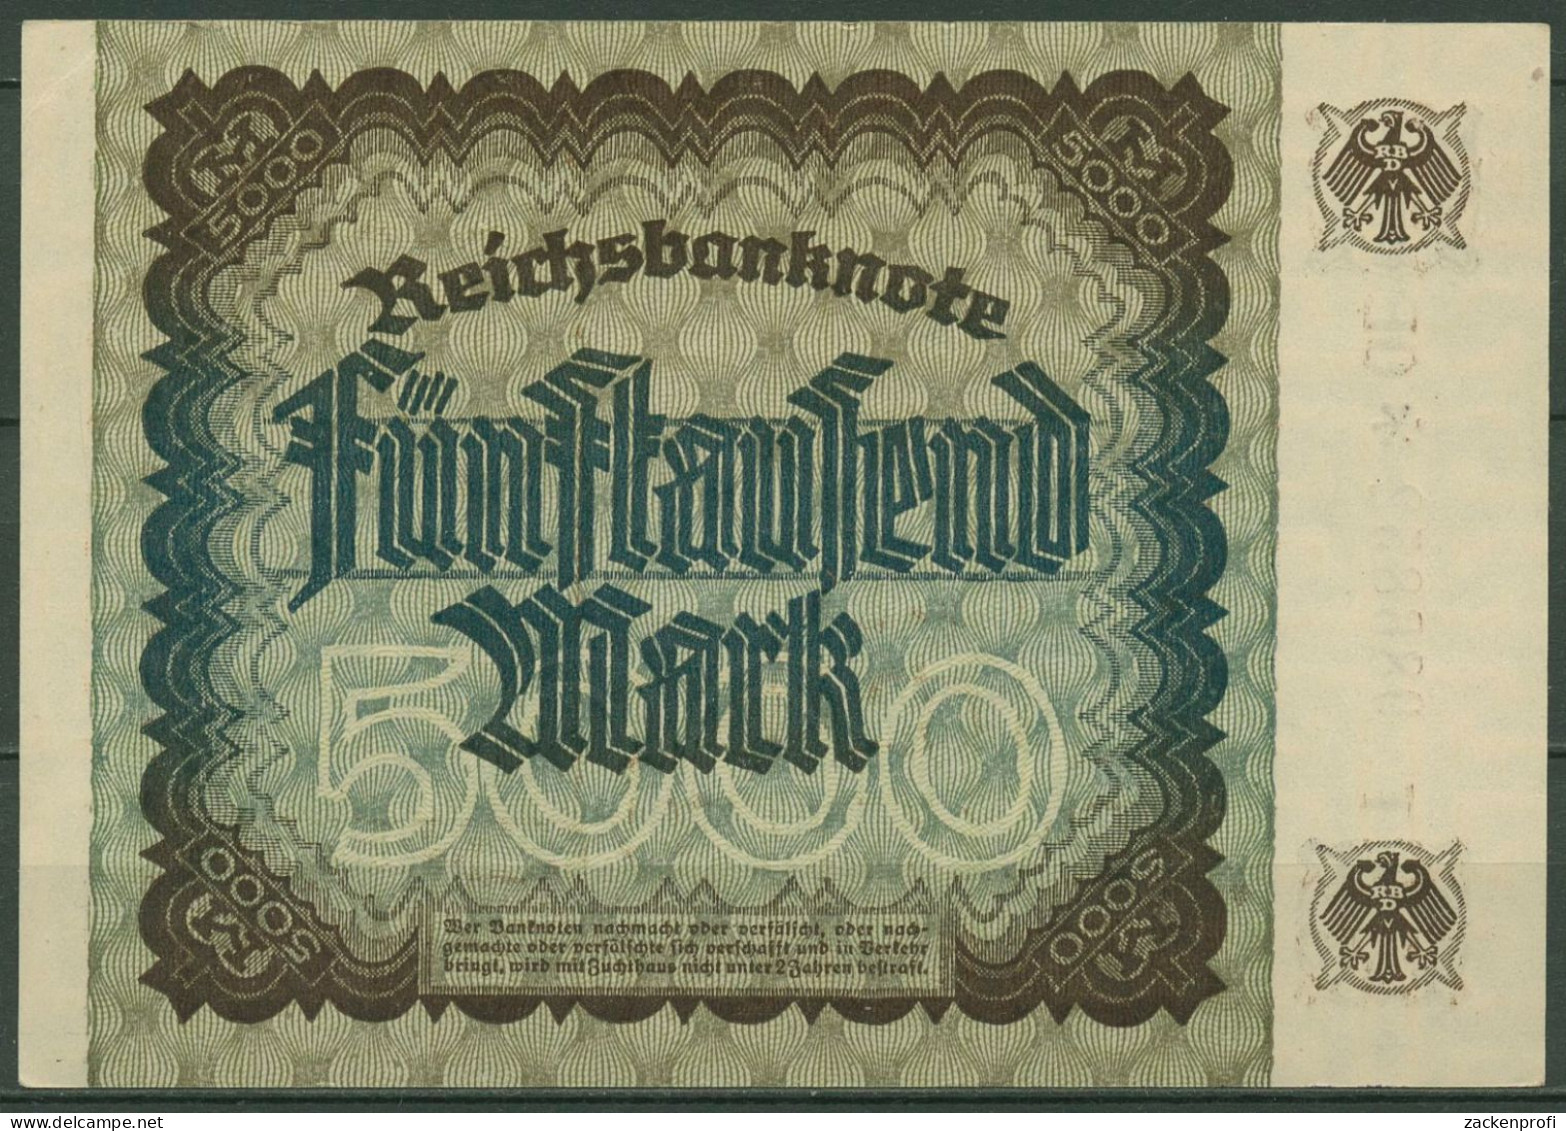 Dt. Reich 5000 Mark 1922, DEU-91b FZ OE, Fast Kassenfrisch (K1400) - 5000 Mark